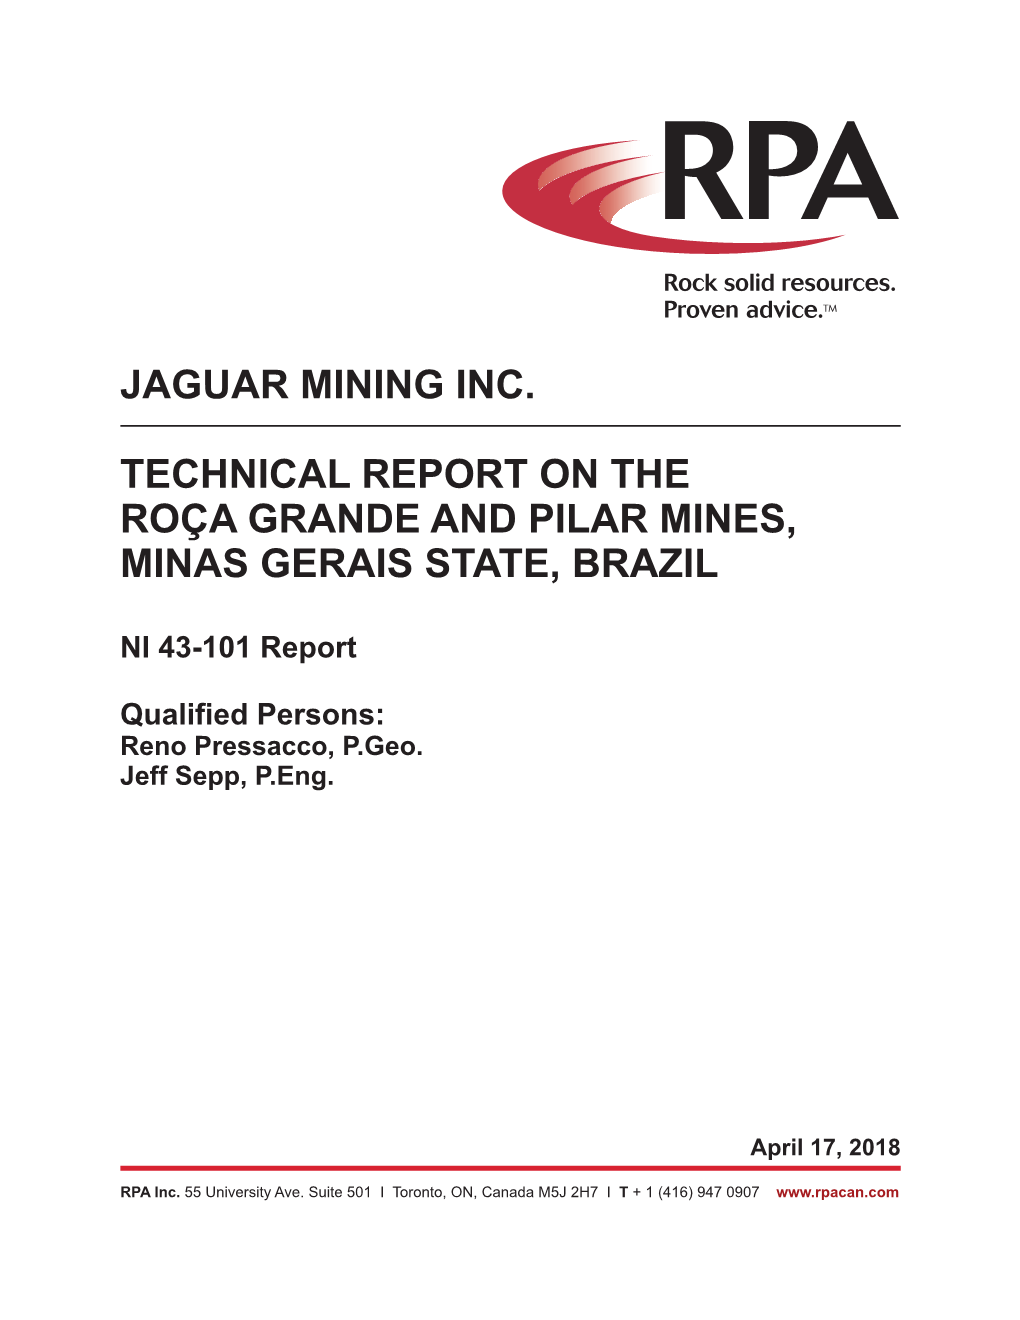 Jaguar Mining Inc. Technical Report on the Roça Grande